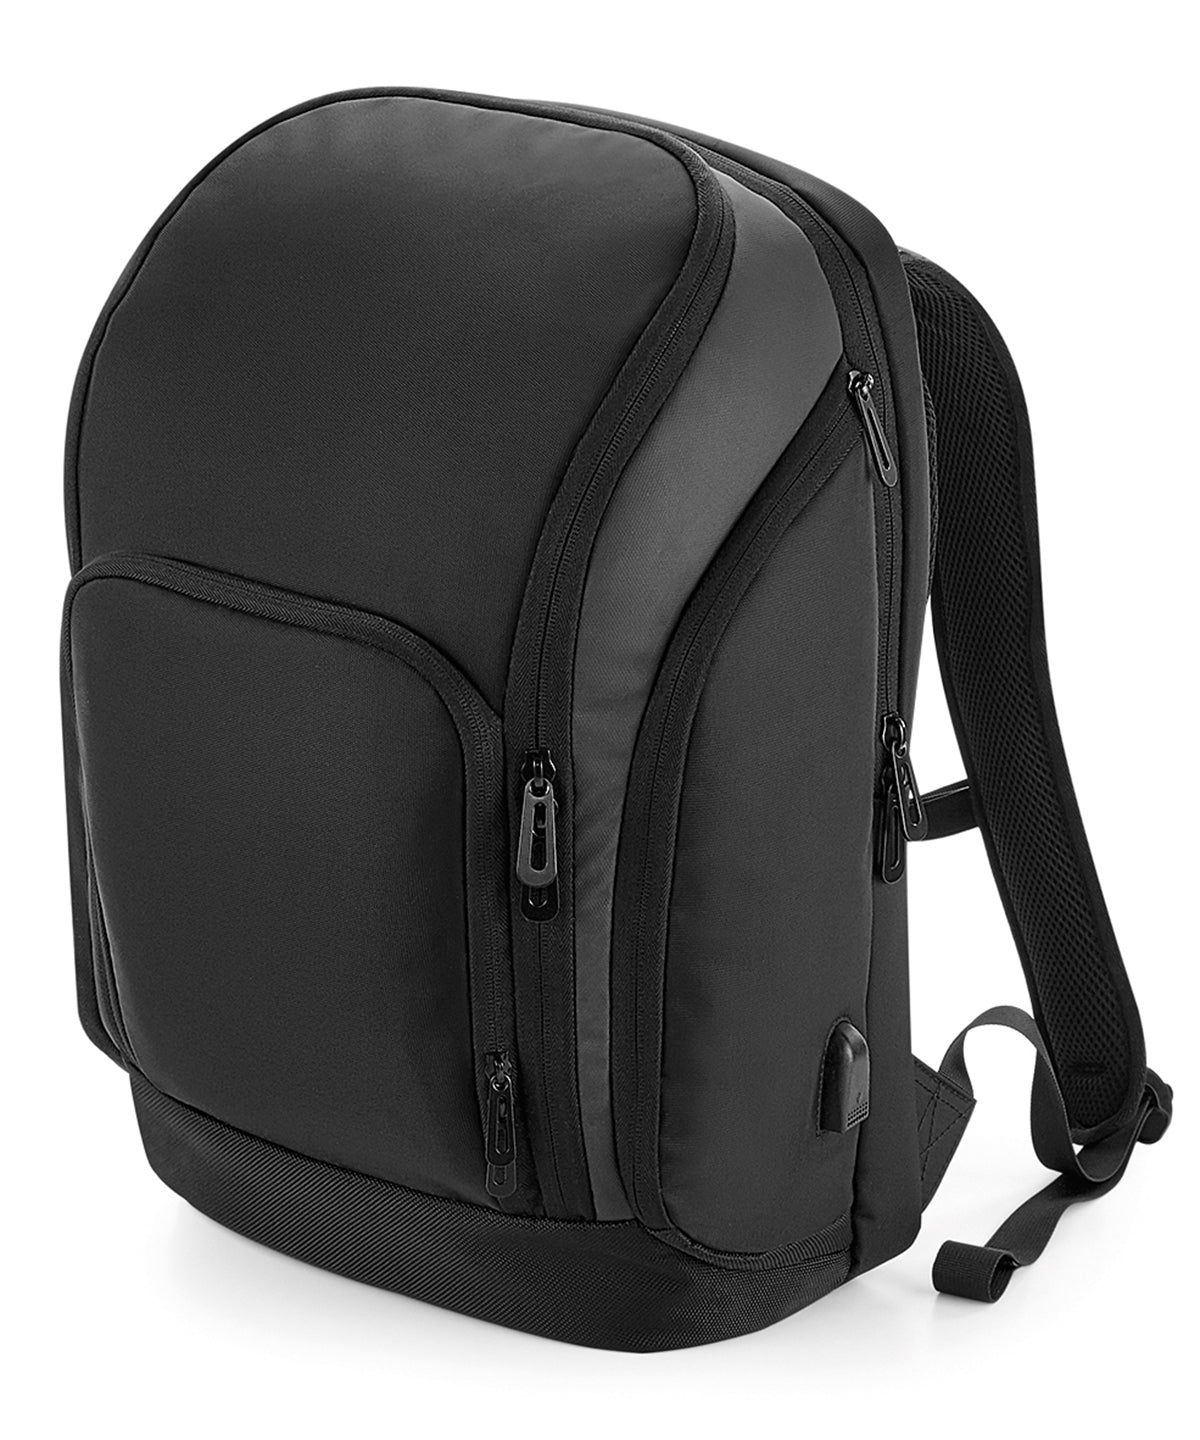 Töskur - Pro-tech Charge Backpack